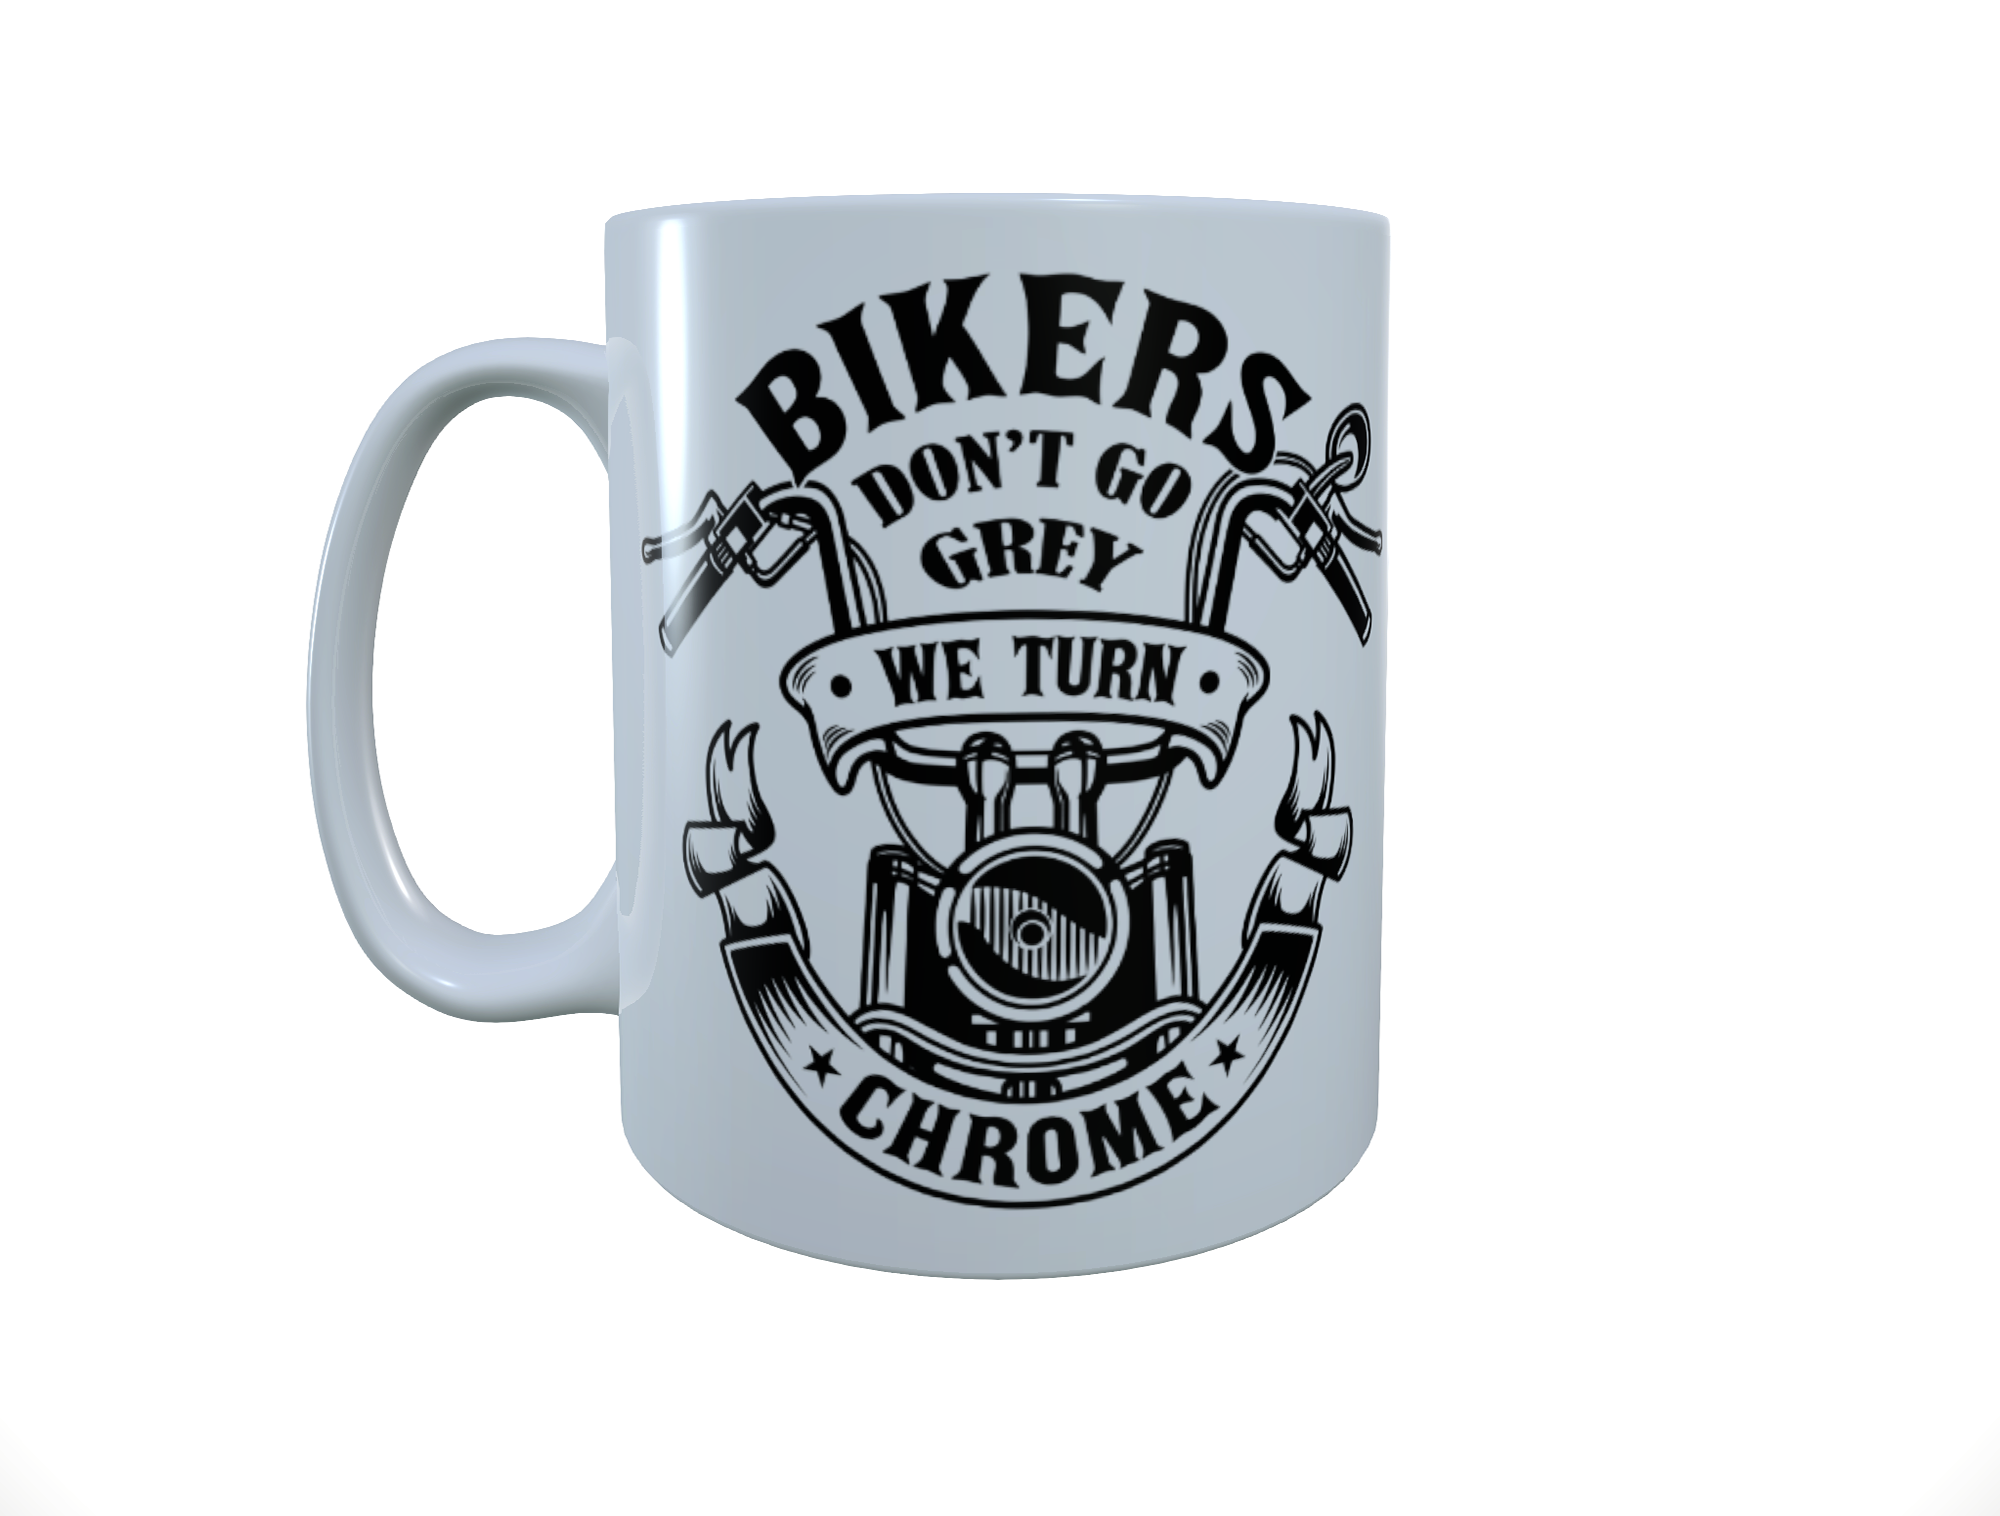 Motorbike Ceramic Mug - Bikers don't go grey we turn chrome